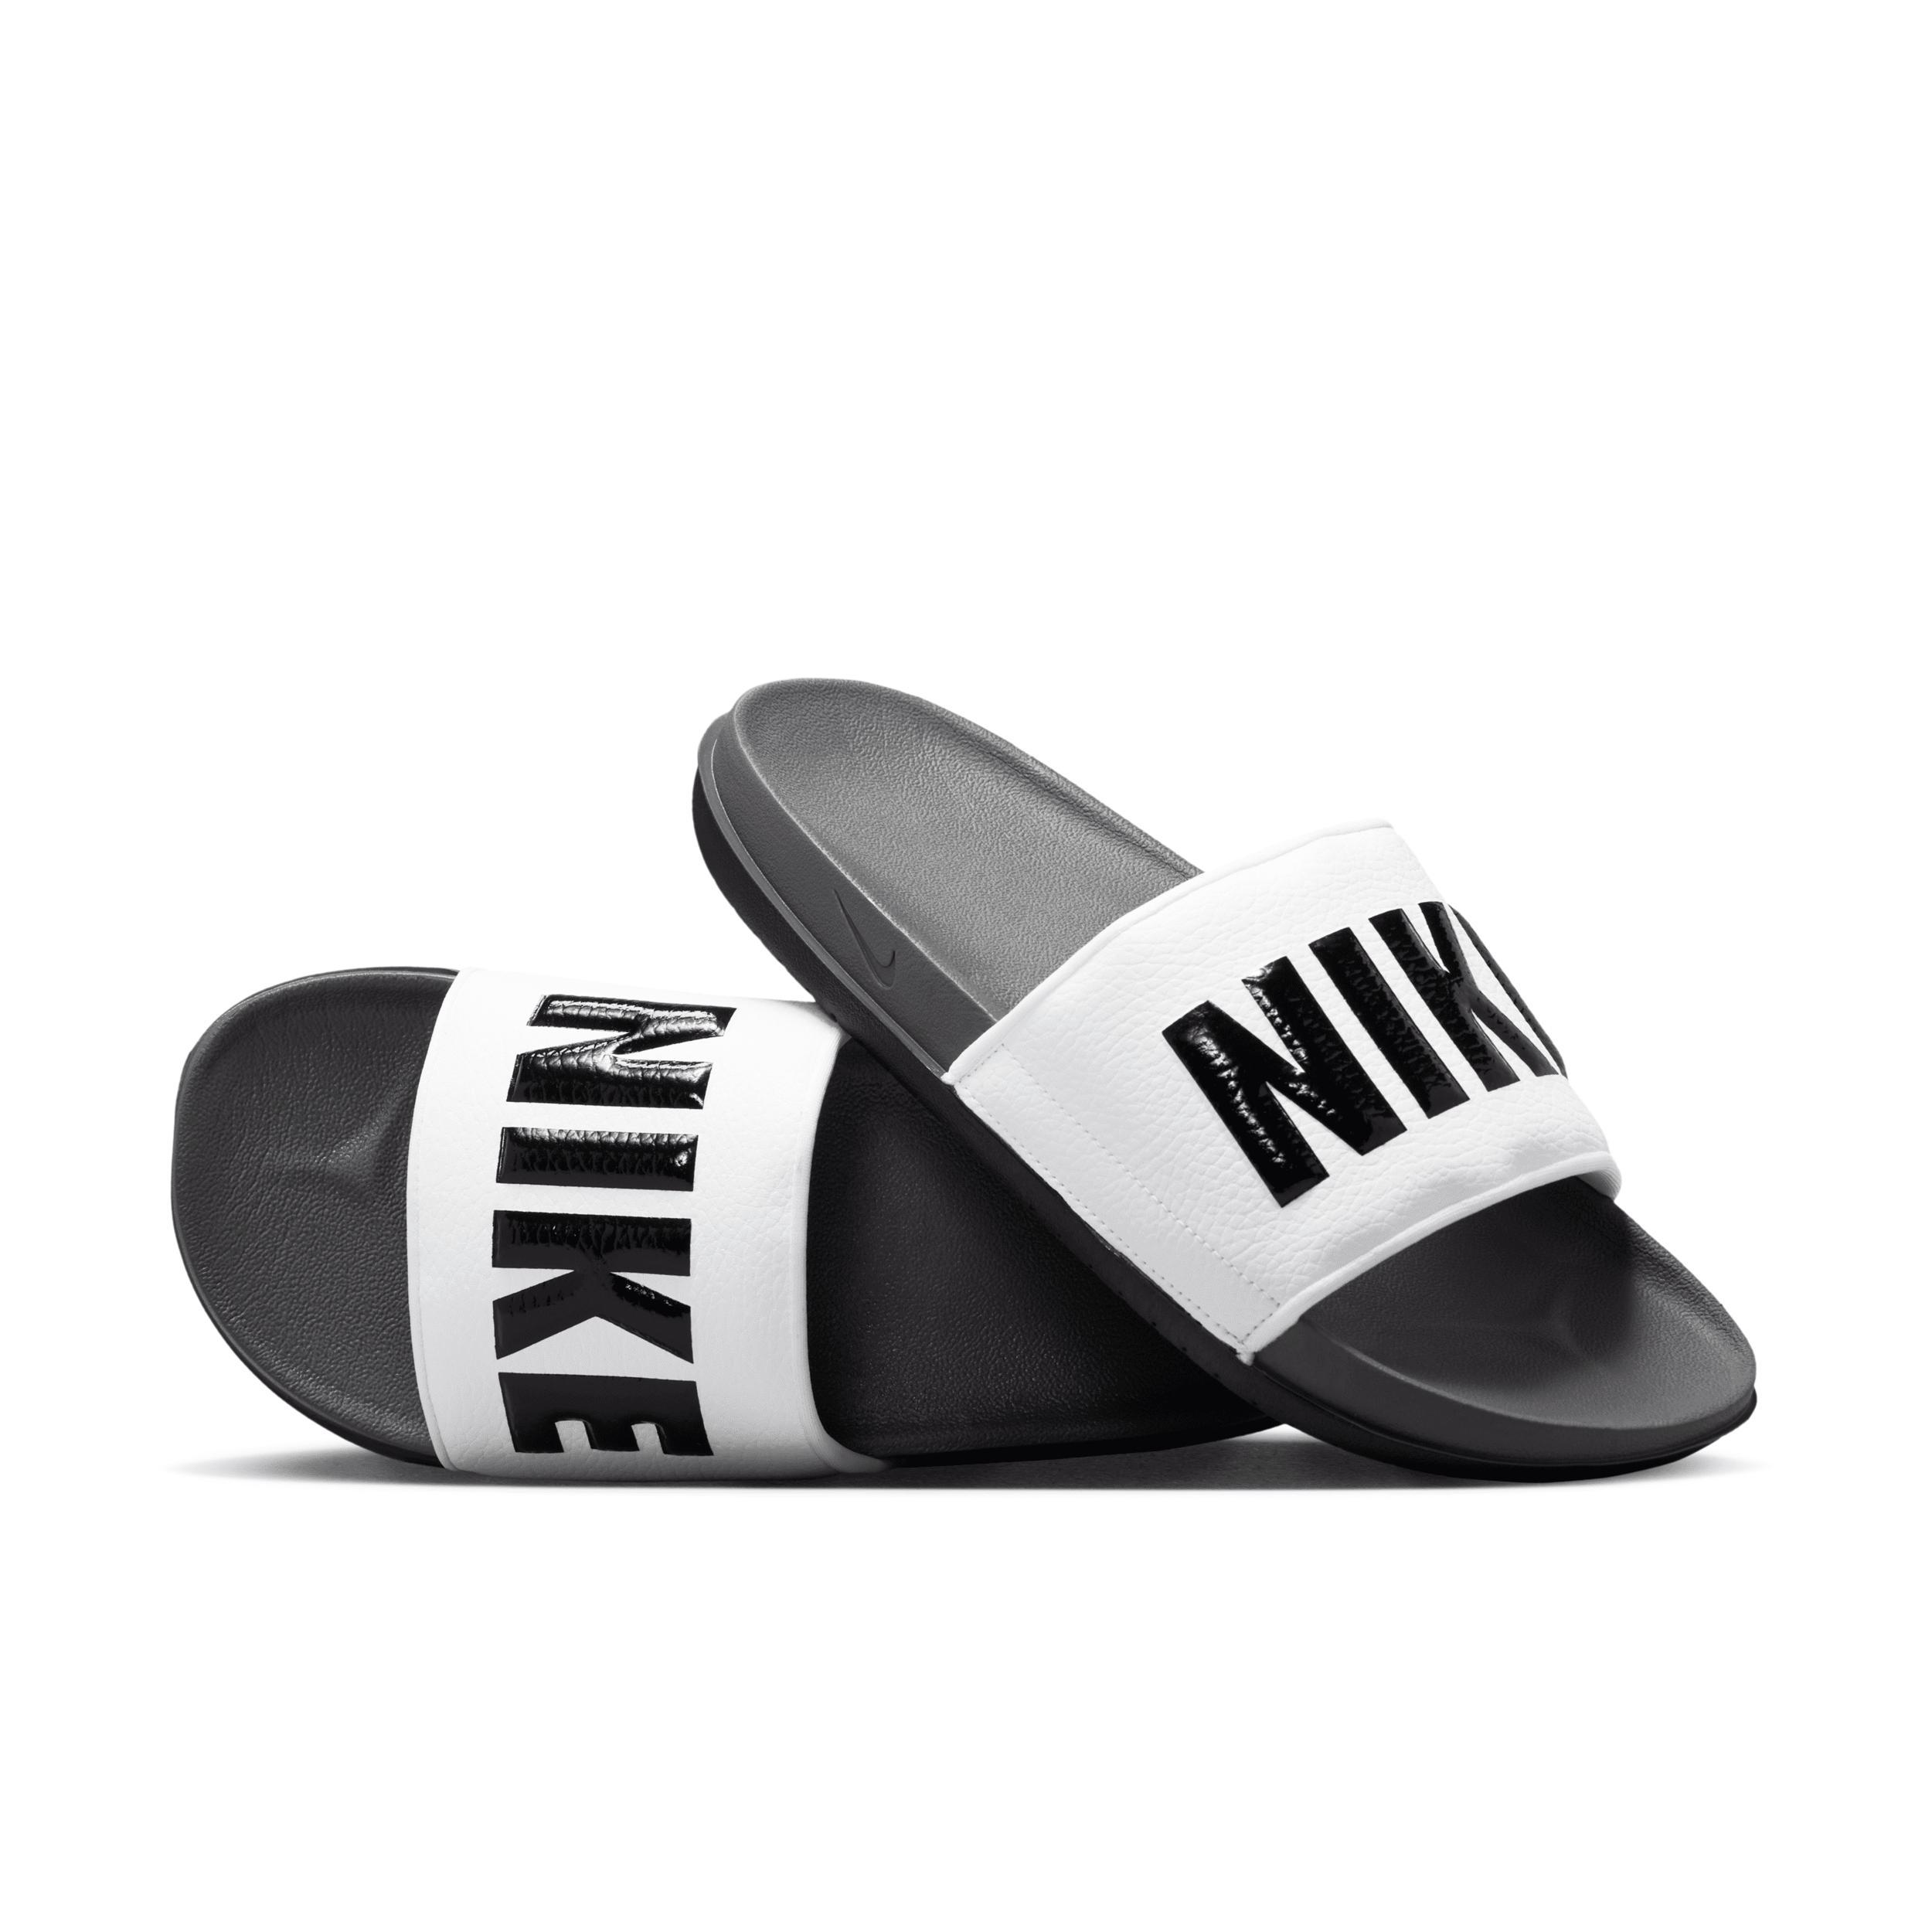 Nike Men's Offcourt Slides Product Image